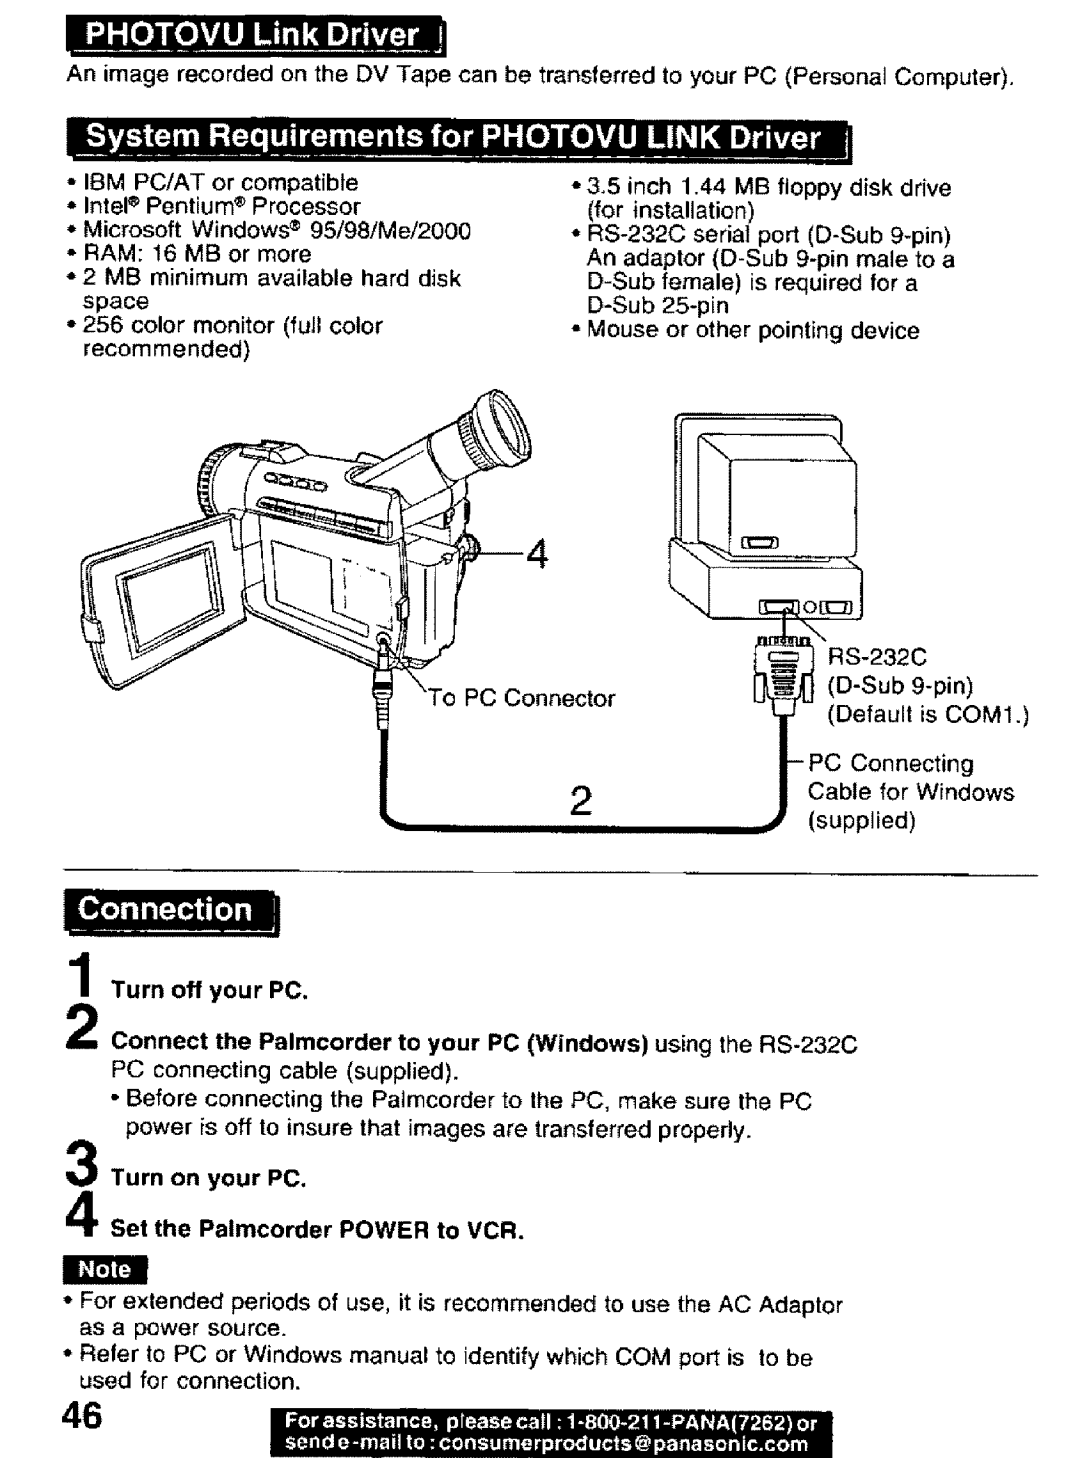 Panasonic PV-DV101 manual I,,i-OllOltllJ im,q IDTLLVLL, Turn off your PC, Turn on your PC Set the Palmcorder POWER to VCR 